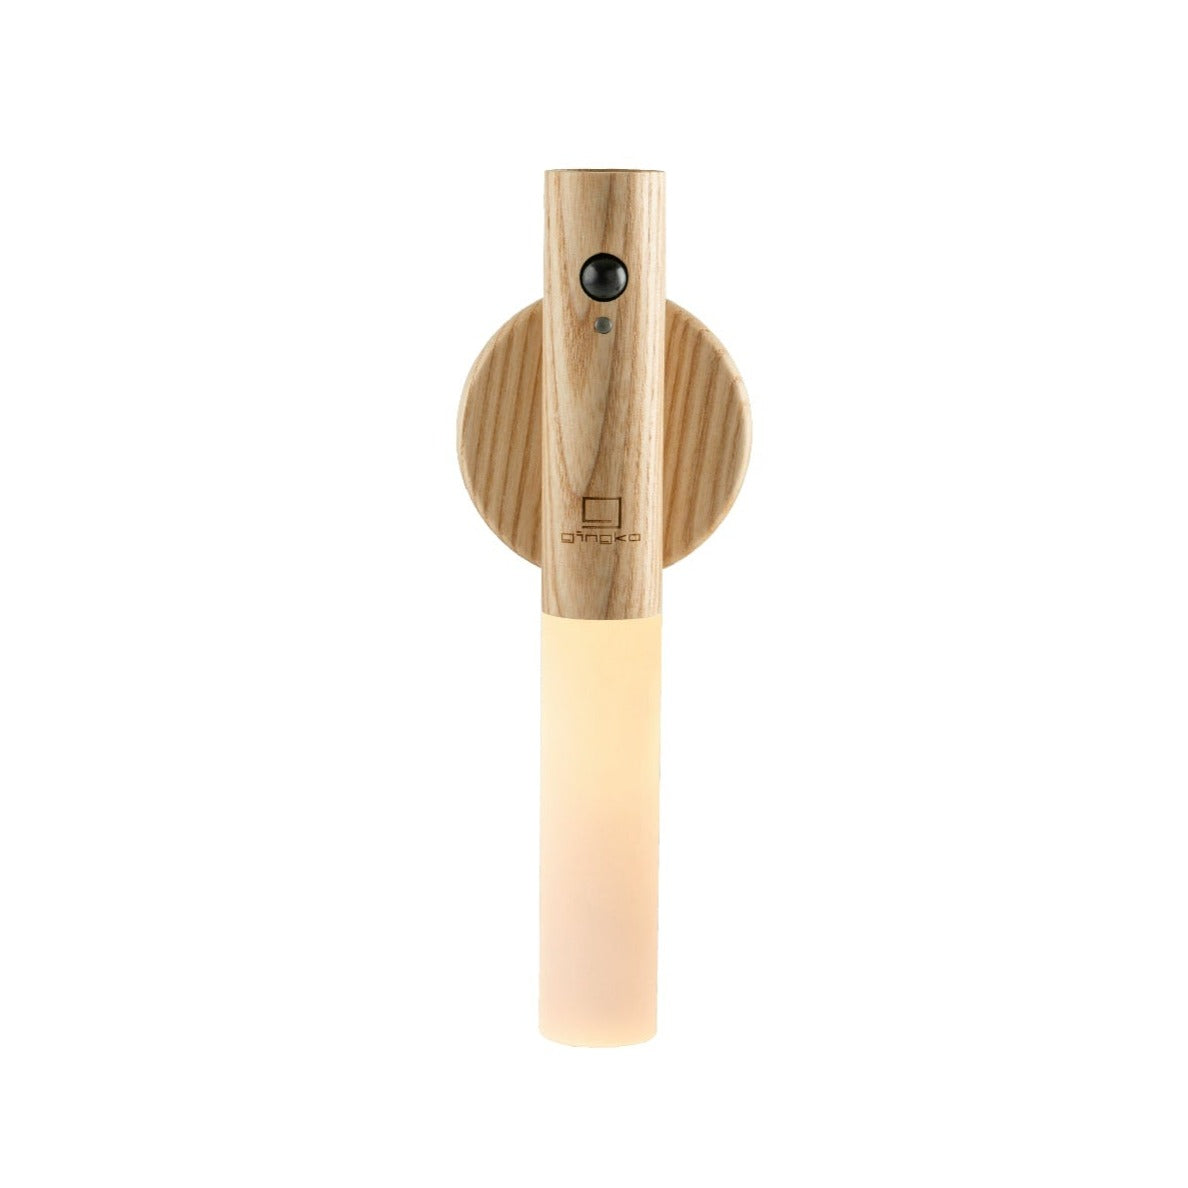 Gingko Design Smart Baton Light - White Ash